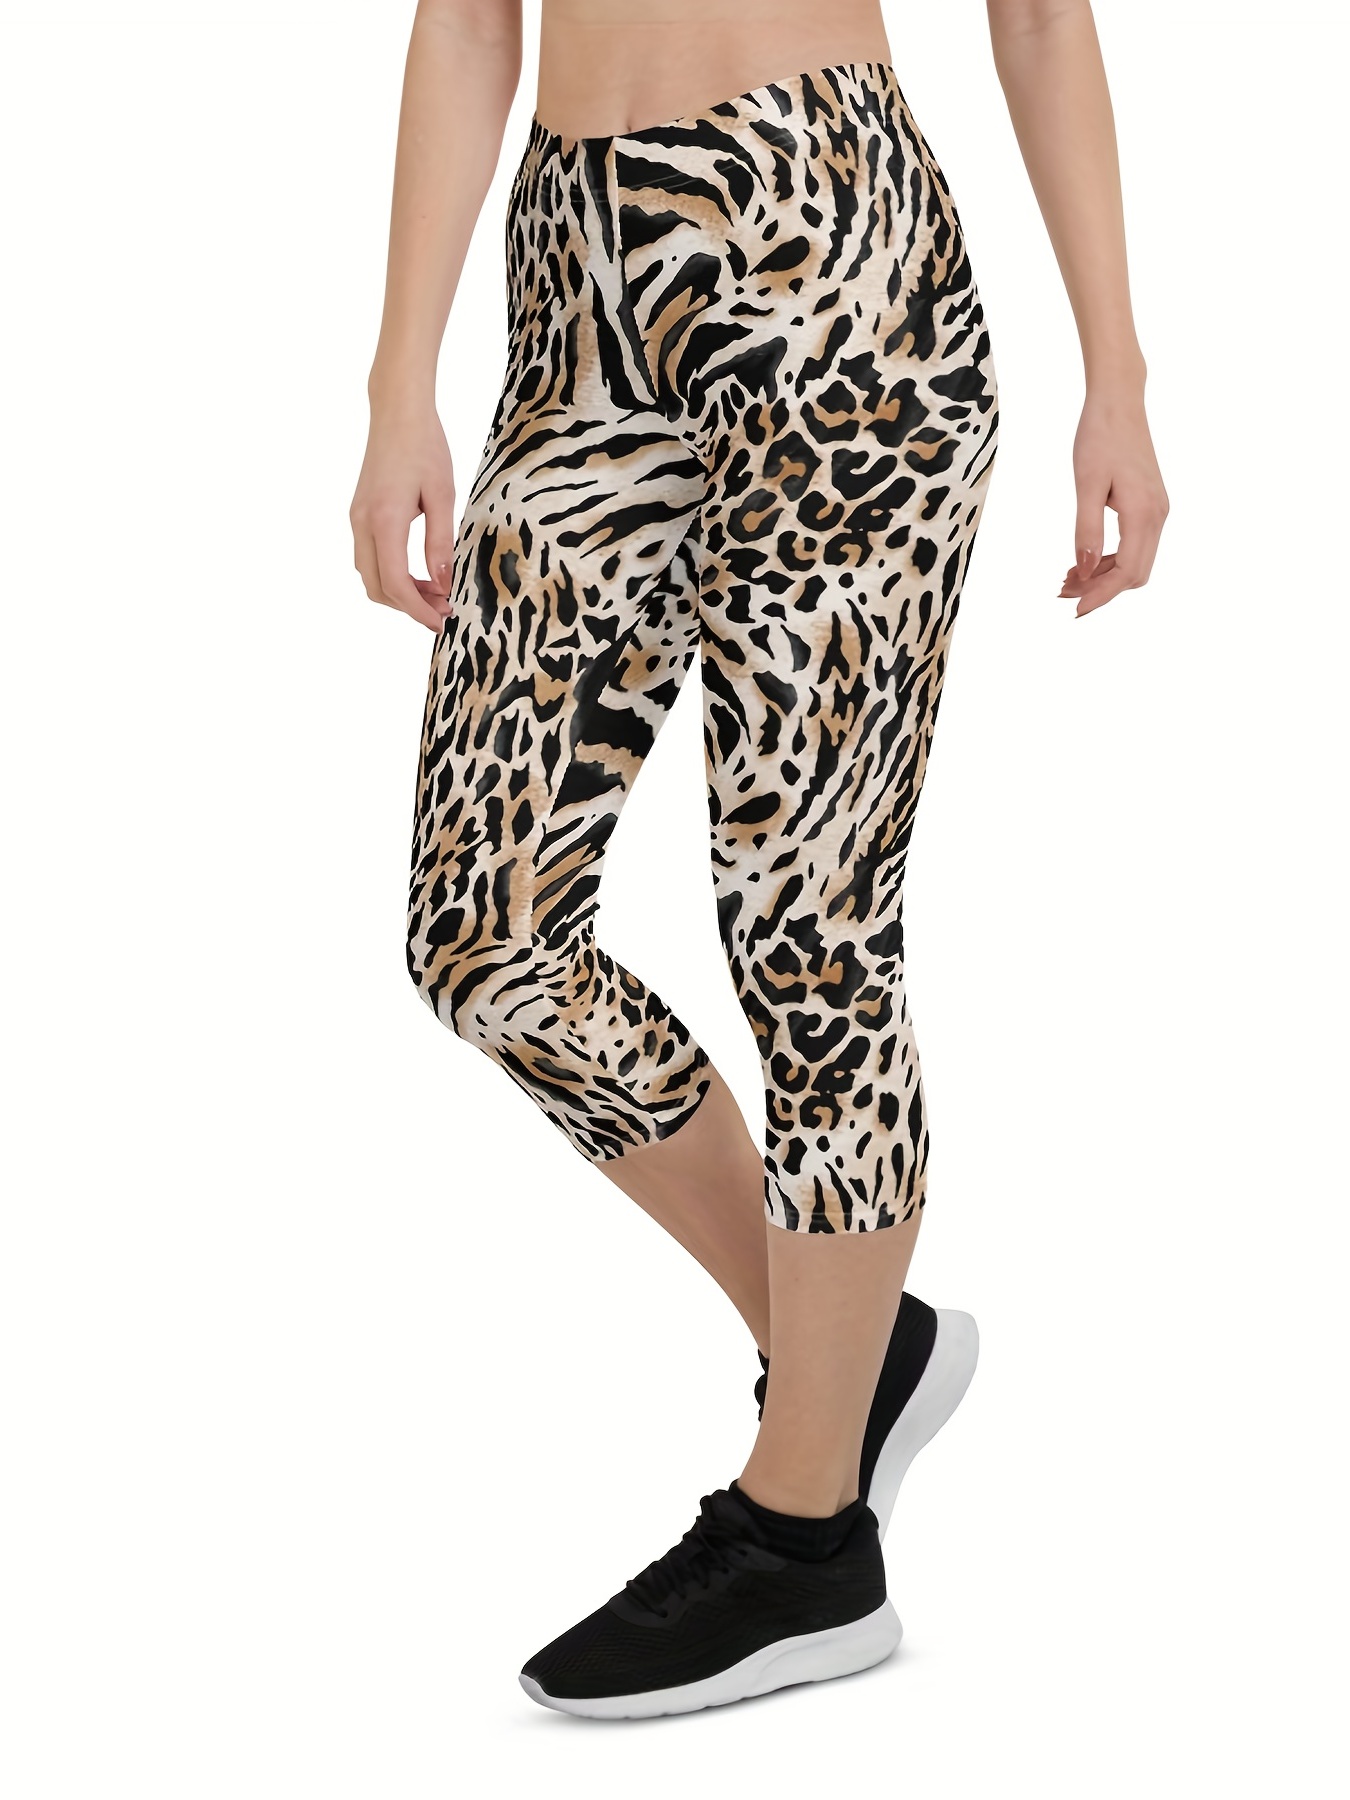 Leopard Print Leggings in Black, Full Length and Capri, Workout